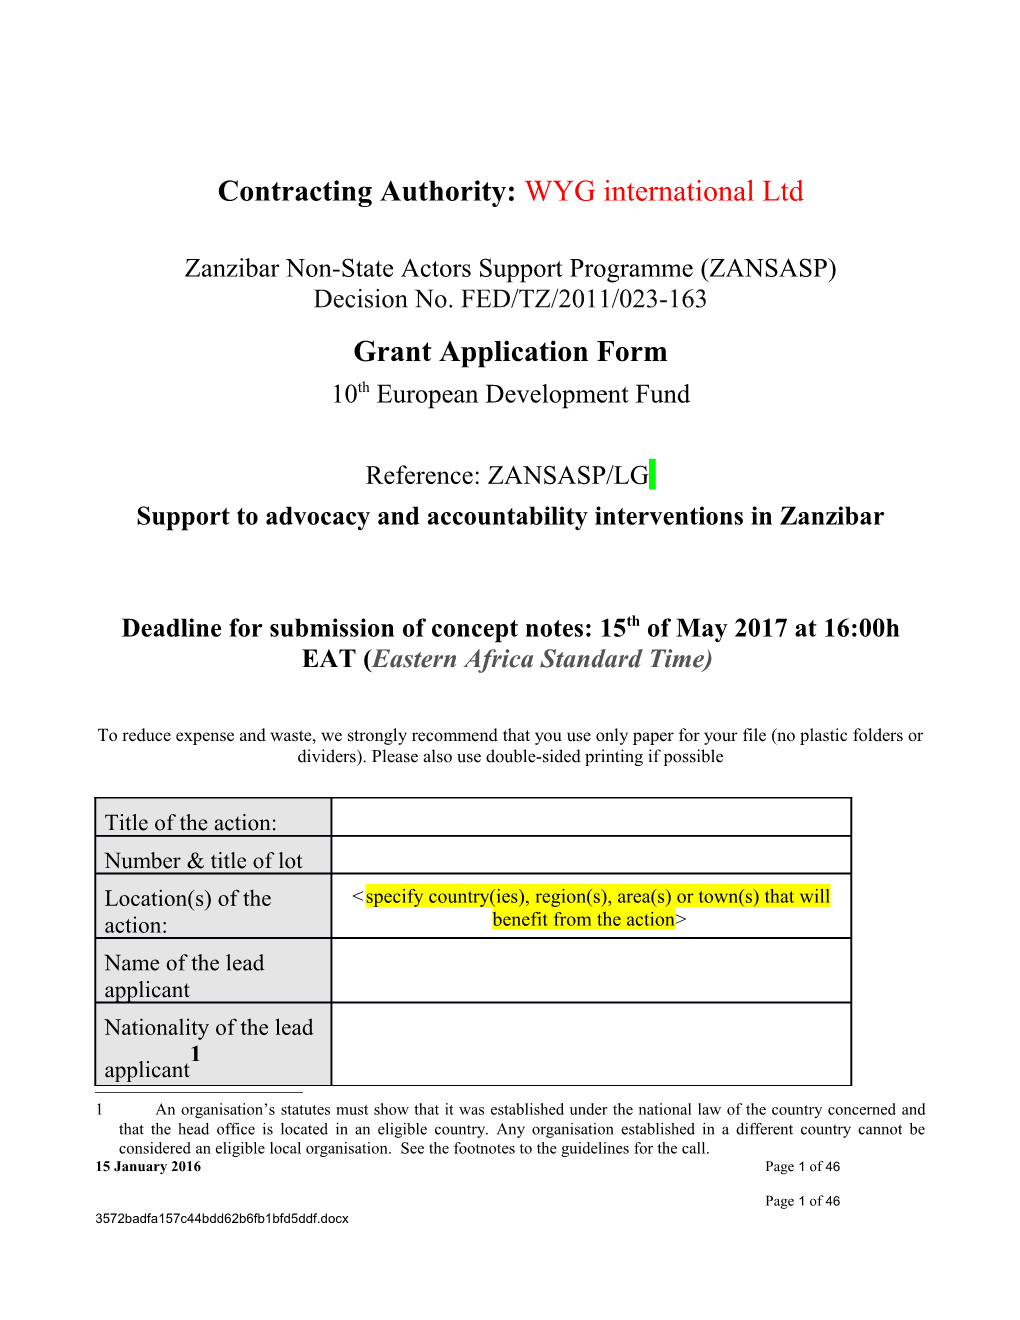 Contracting Authority: WYG International Ltd